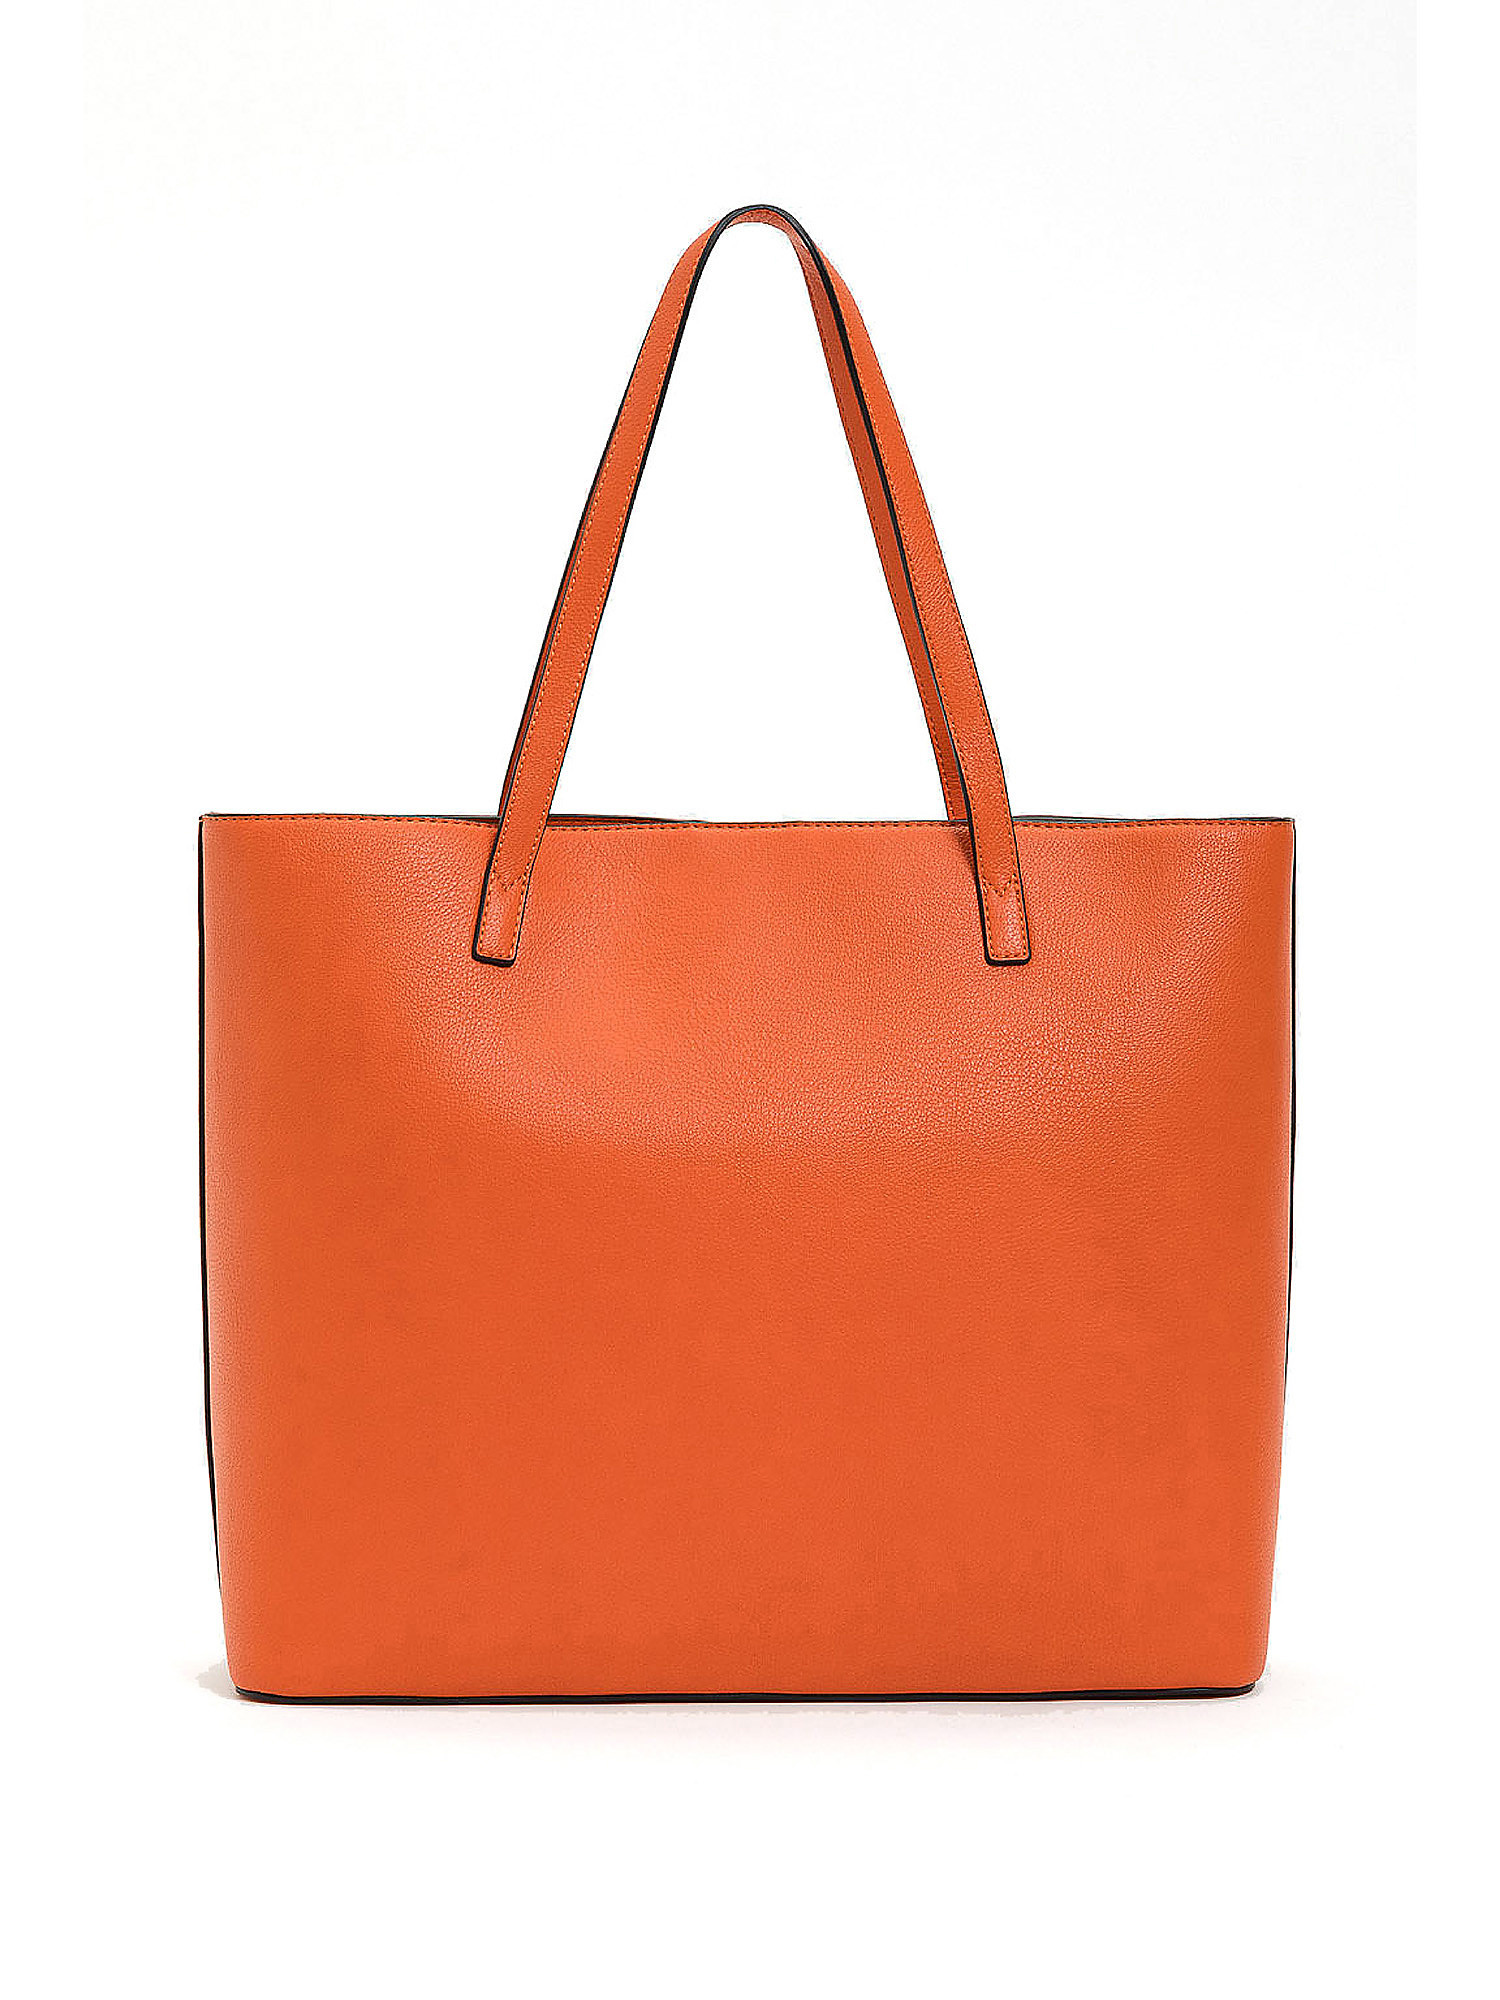 Shopping Bag con nappe, Arancione, large image number 1